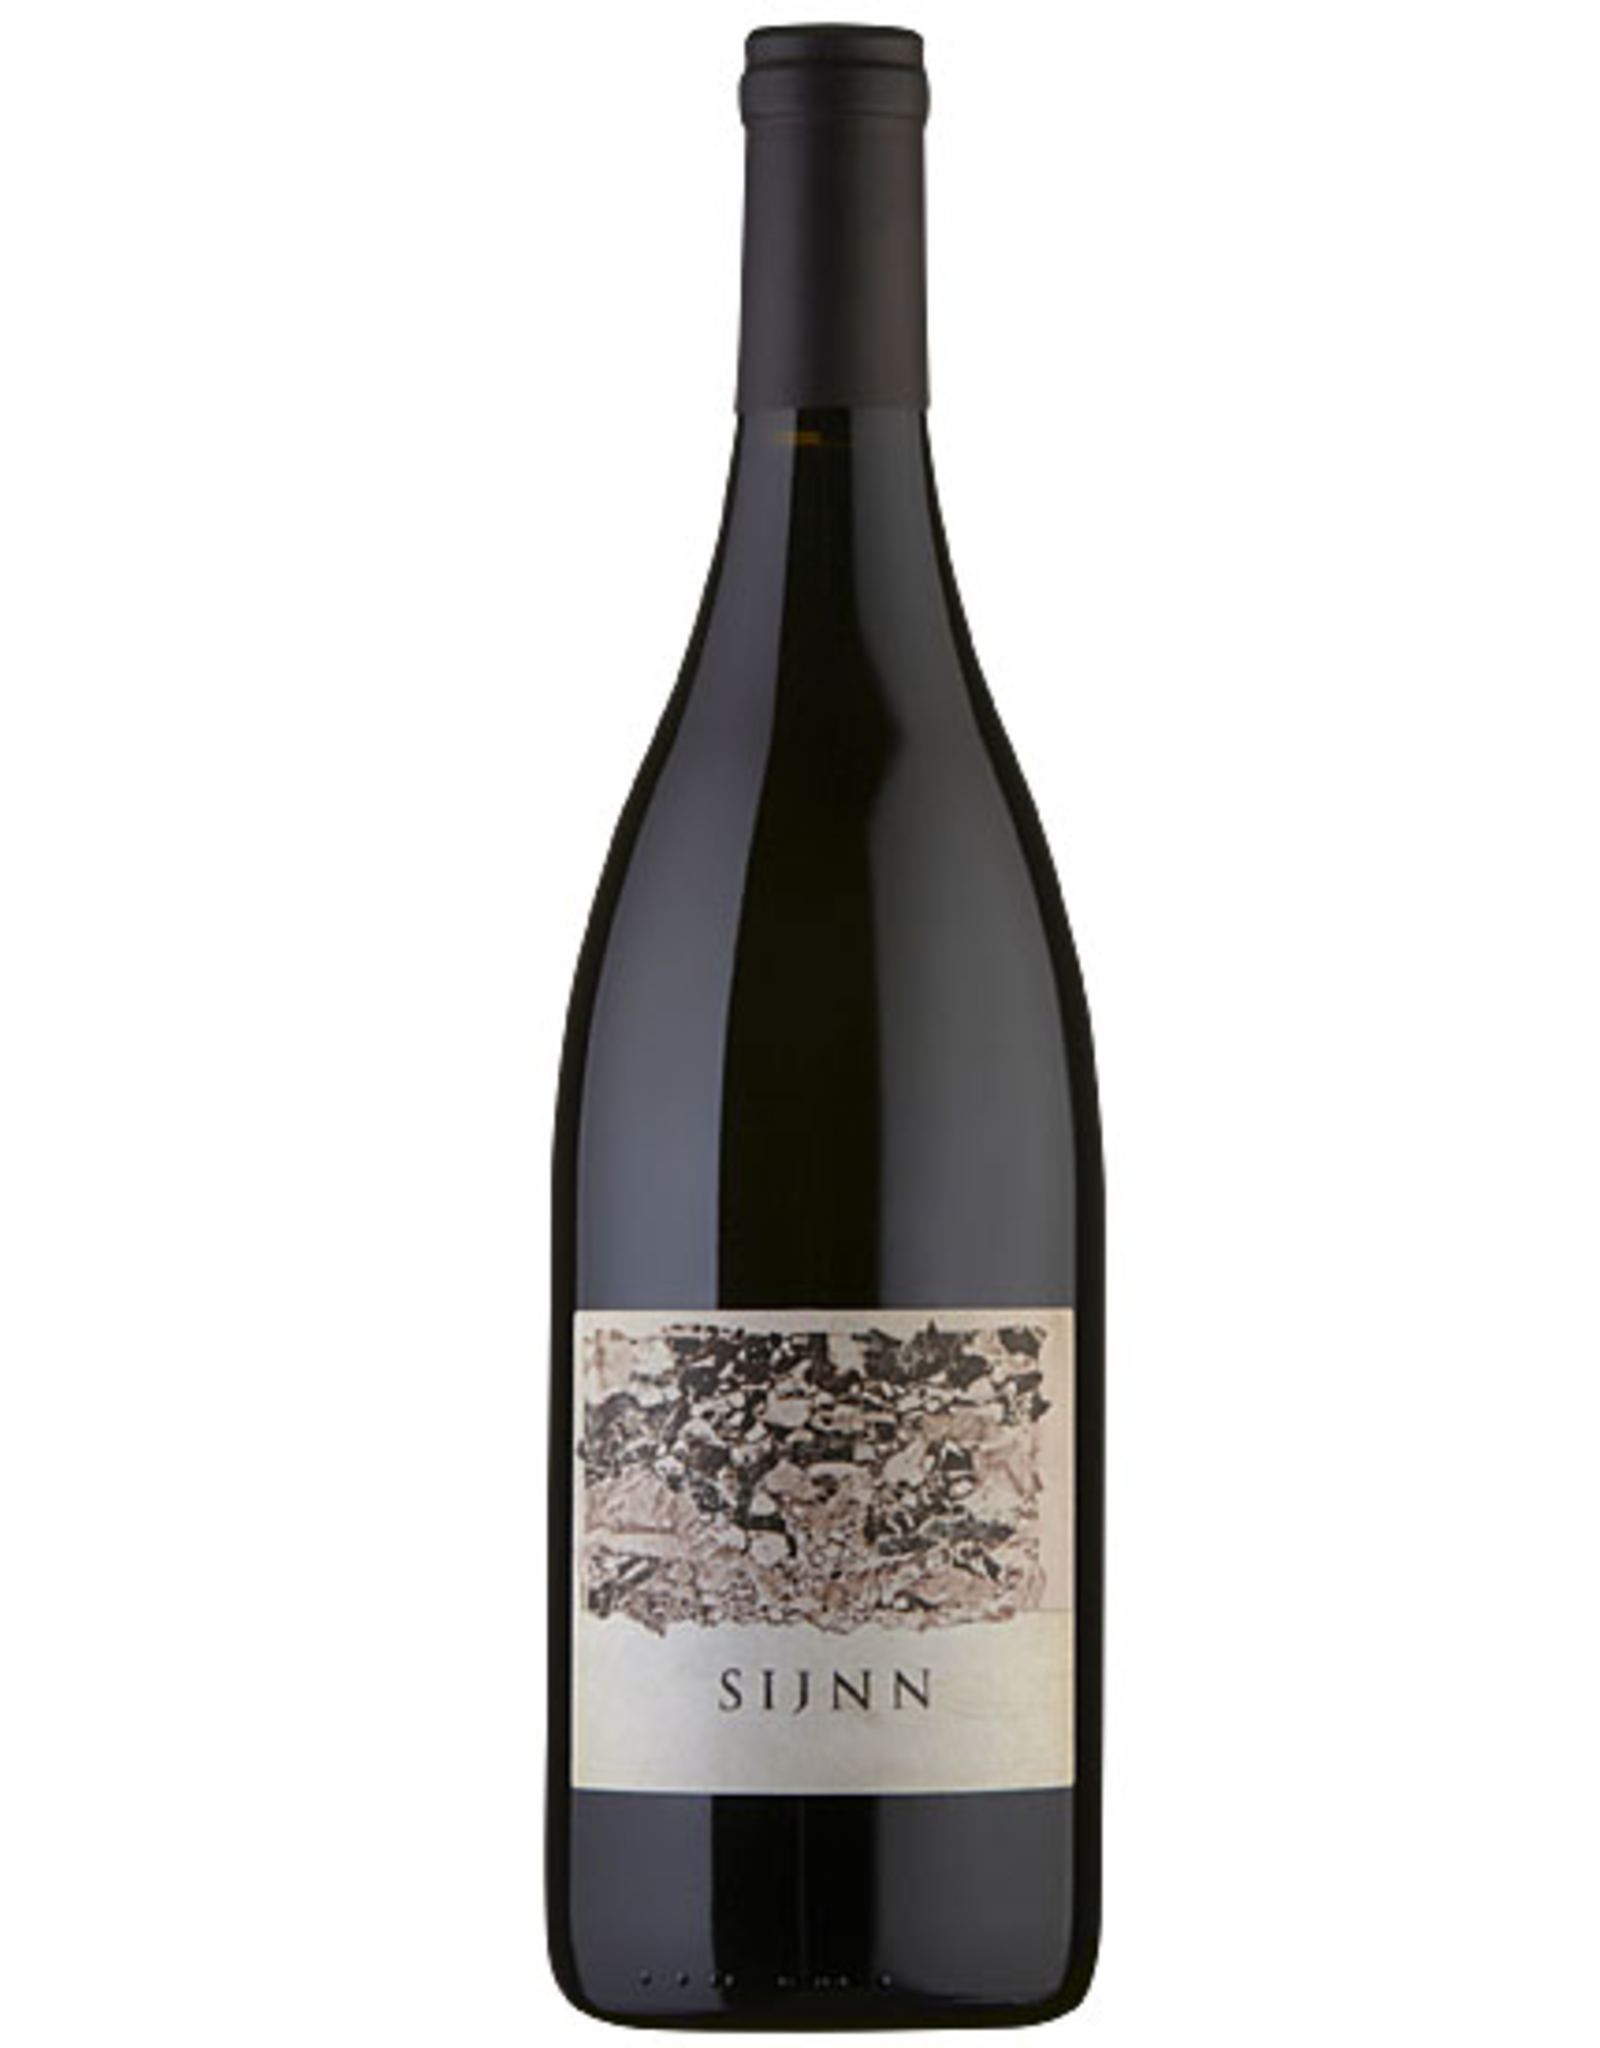 Red Wine 2007, Sijnn, Red Blend, Swellendam, Western Cape, South Africa, 14.5% Alc, CT90